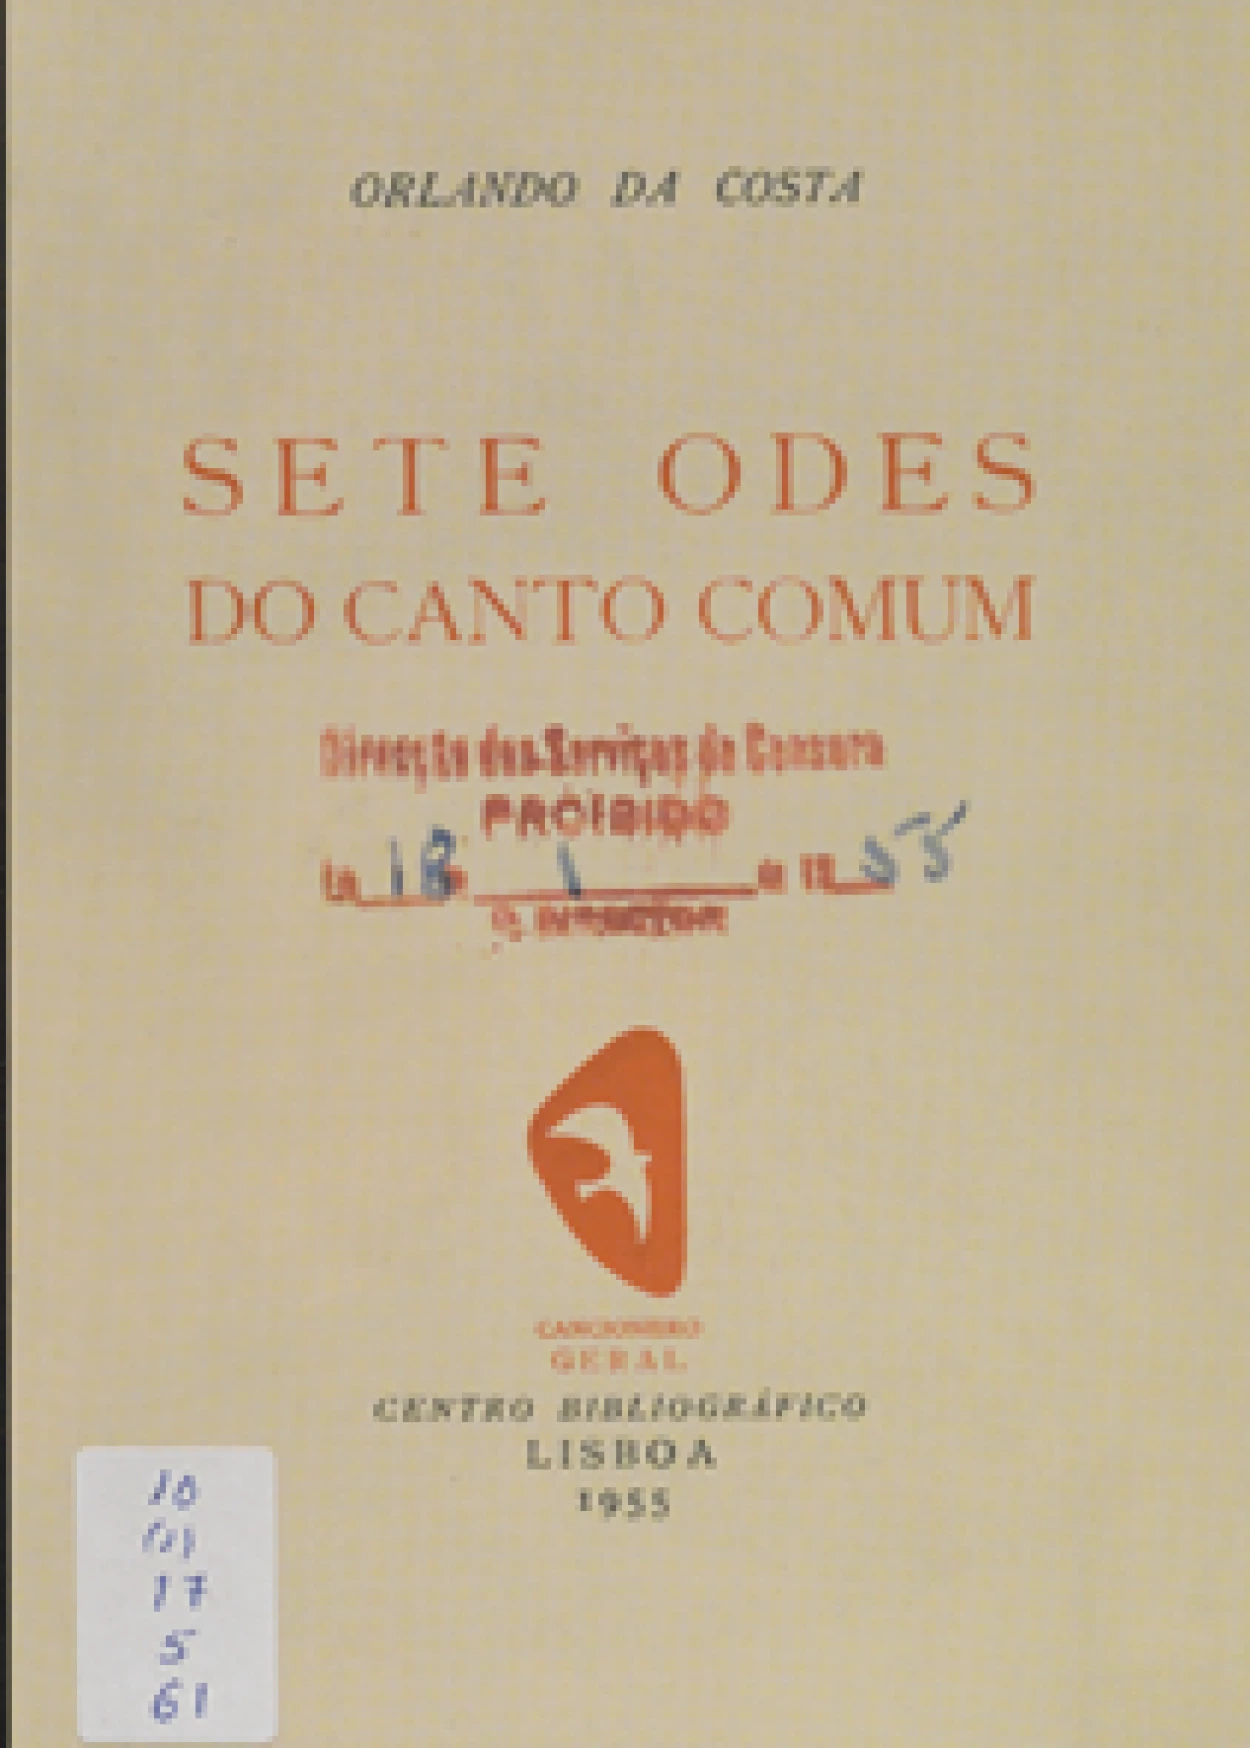 Orlando da Costa, 1929–2006
Sete odes do canto comum
Lisboa : Centro Bibliográfico, 1955.